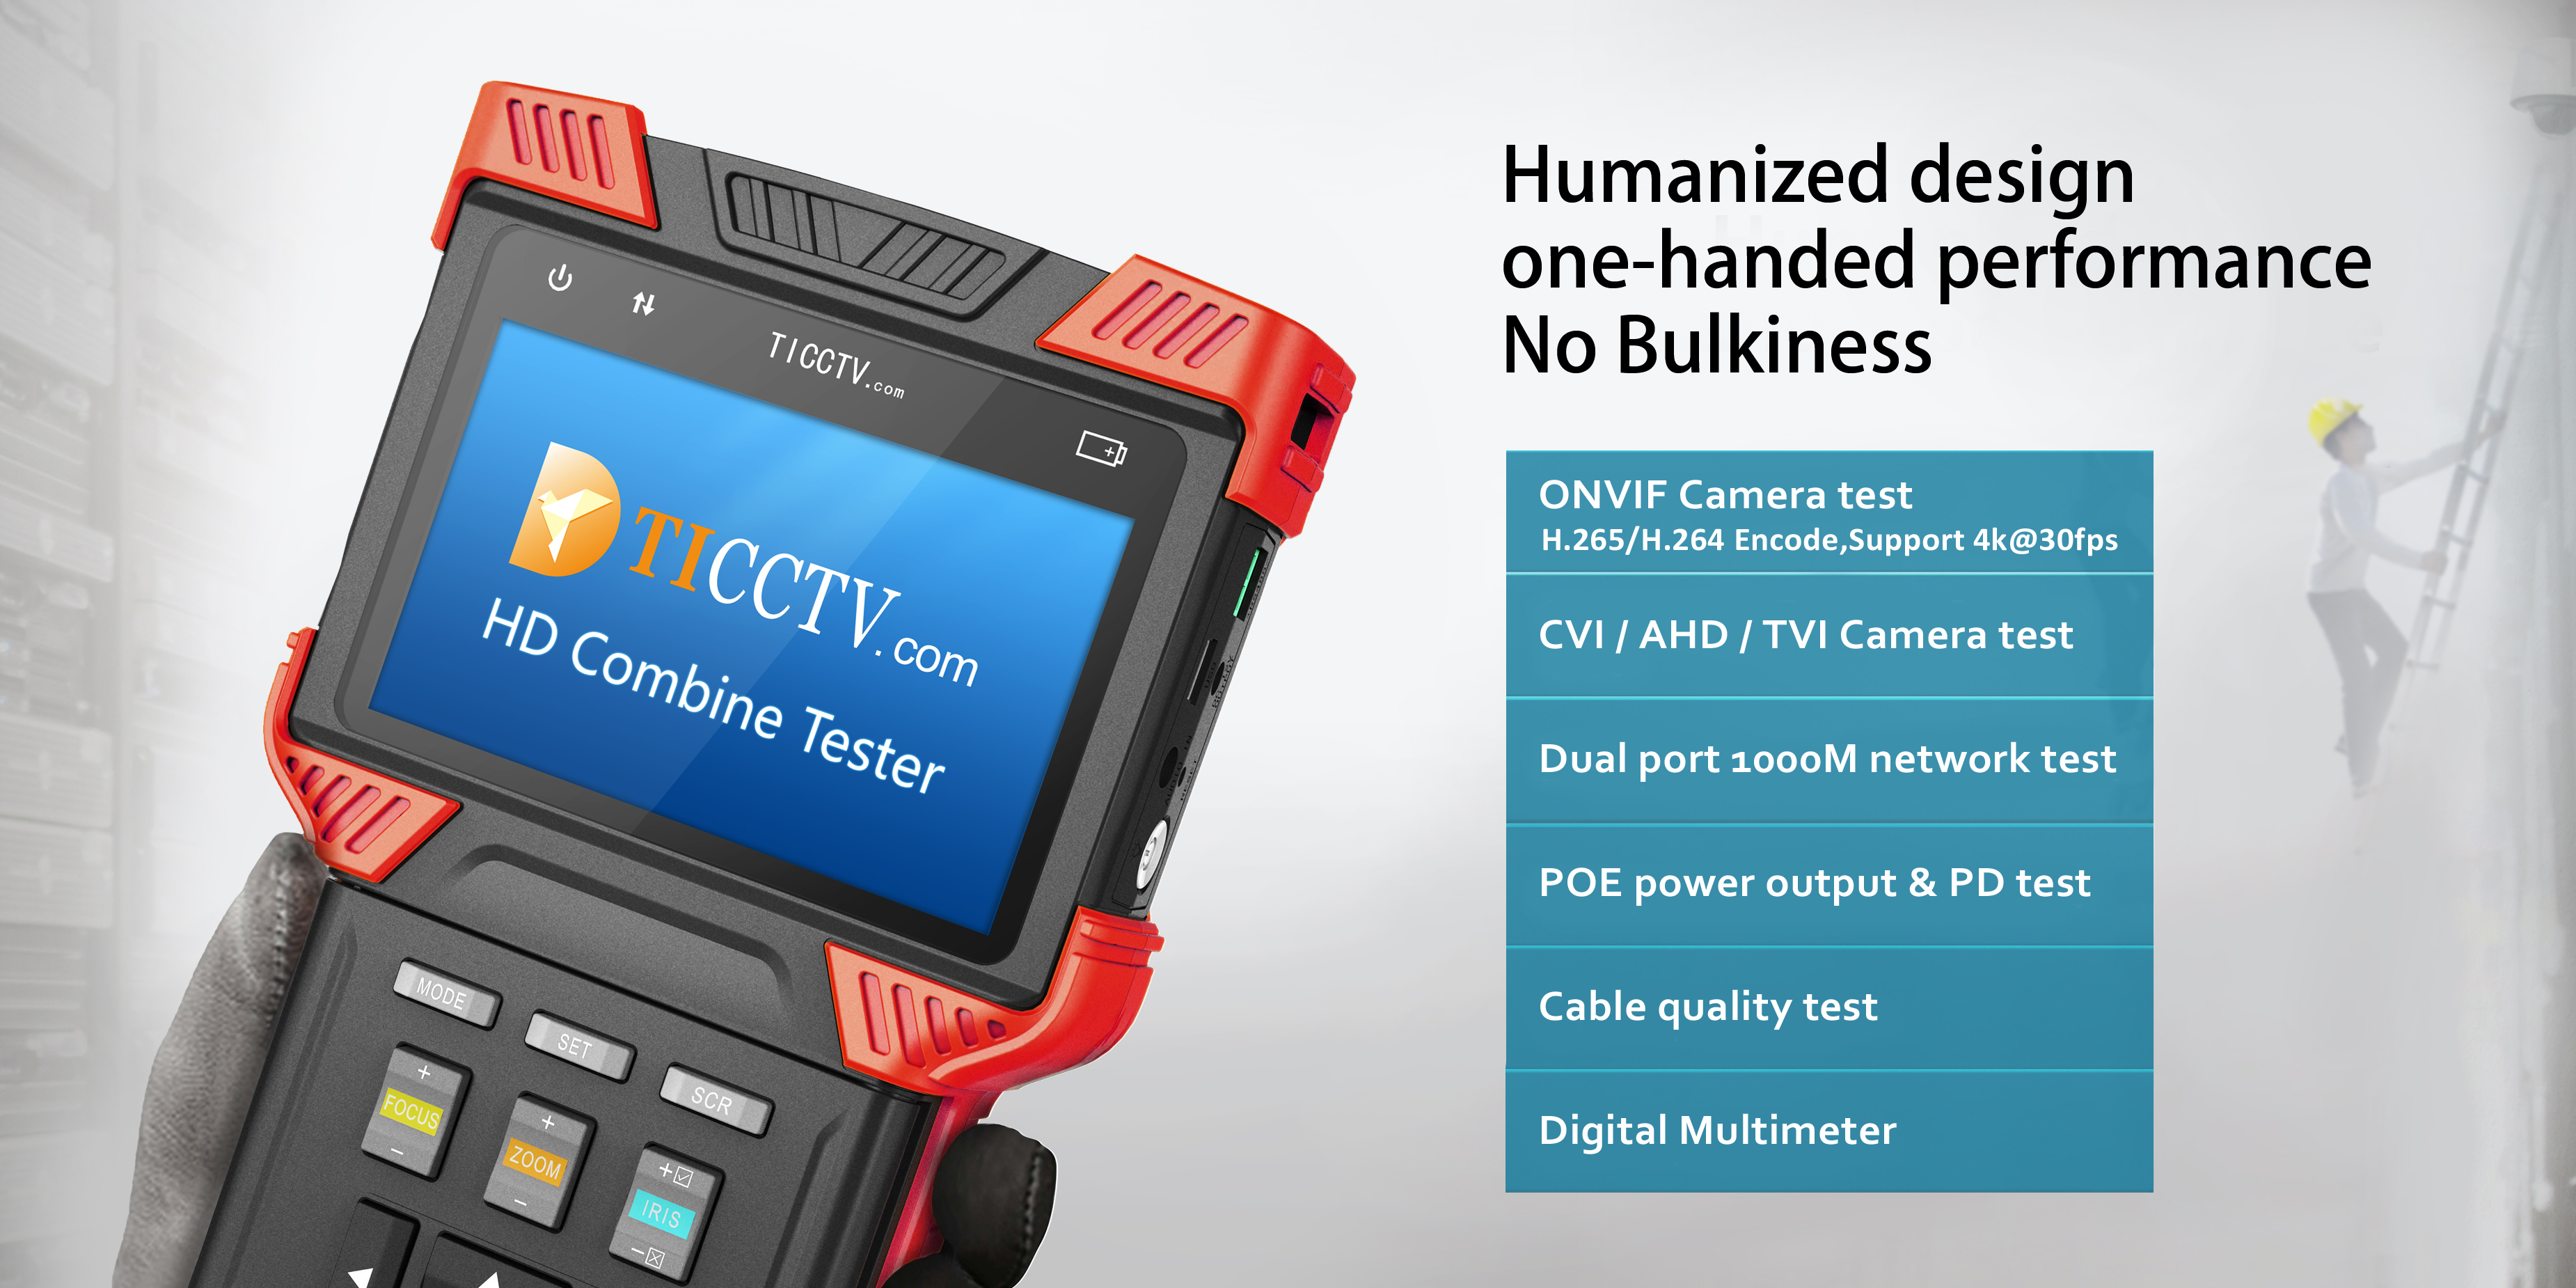 humanized design one-hand performance no bulkiness